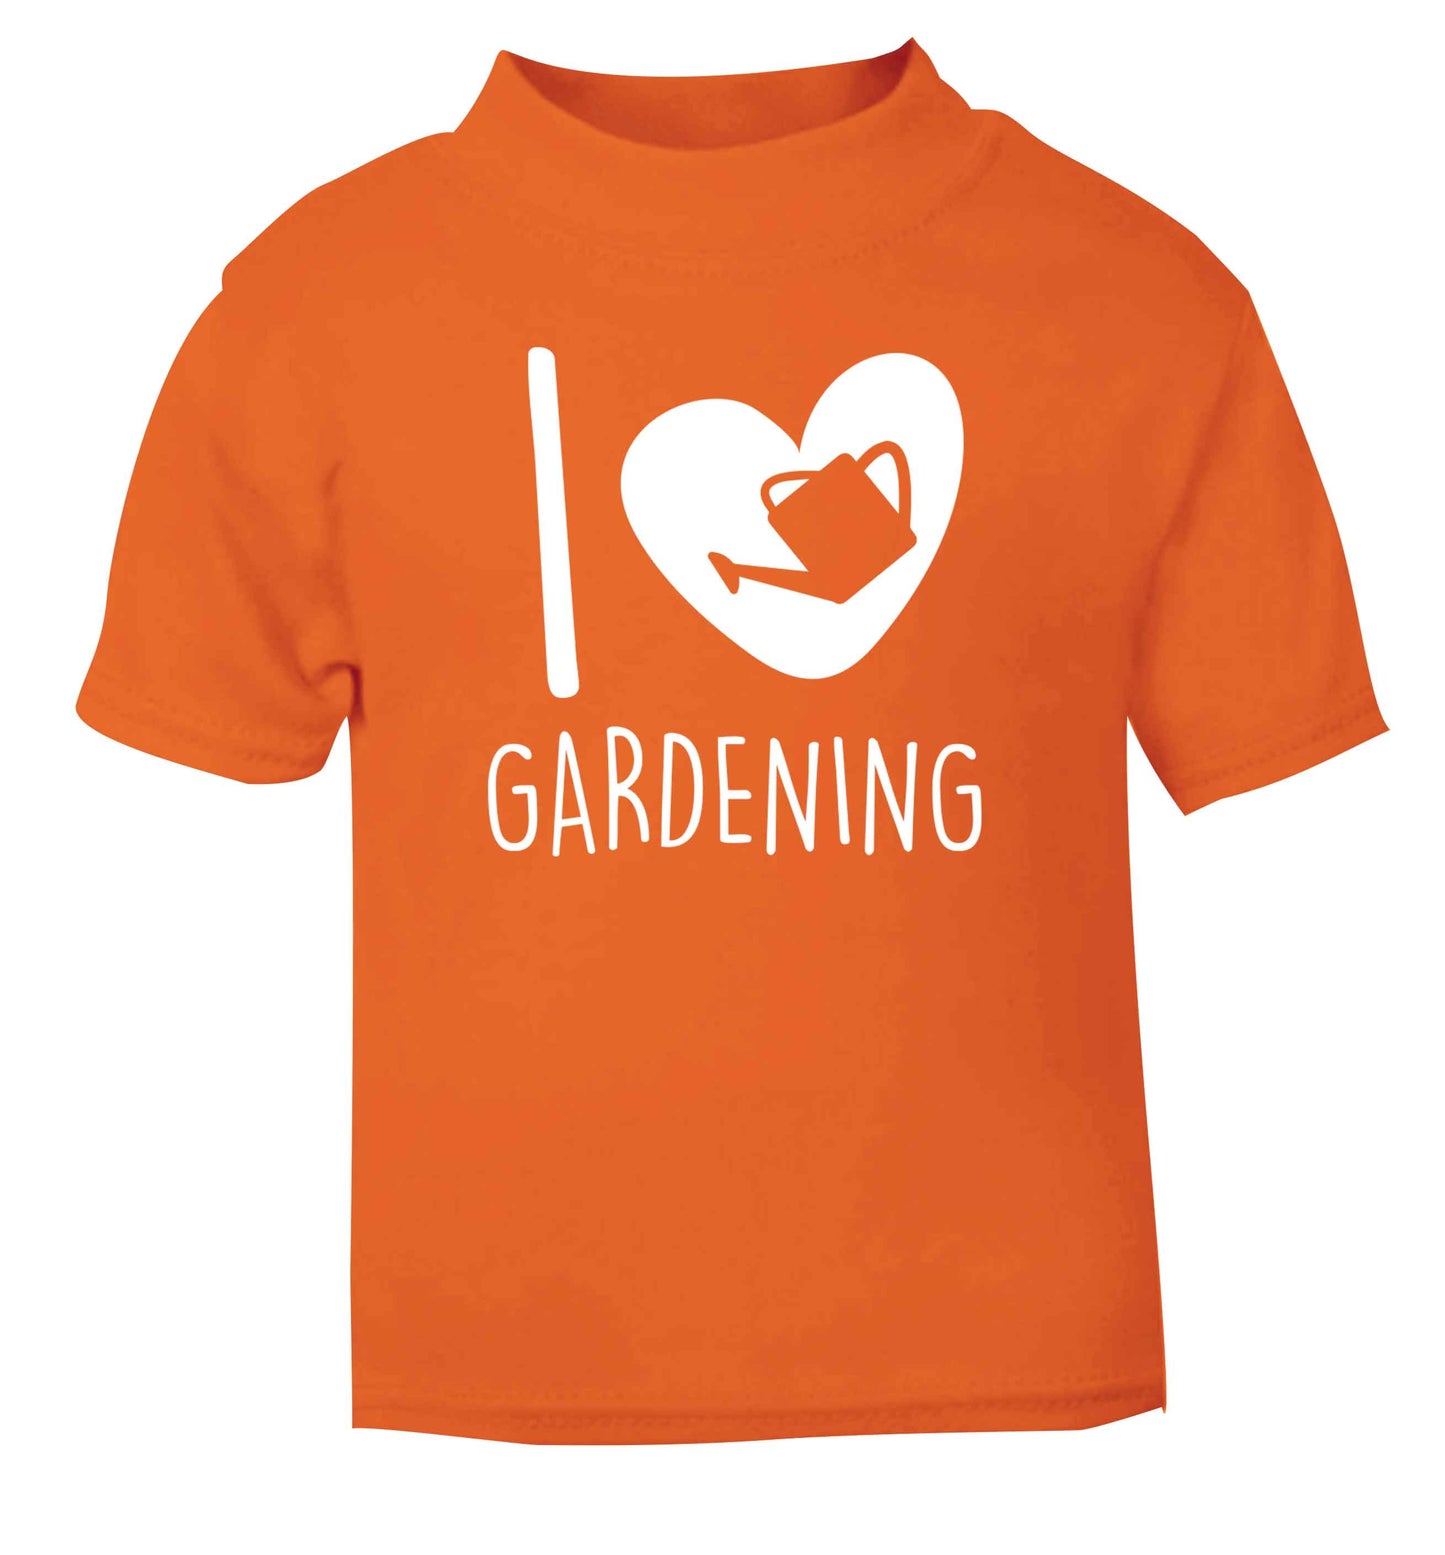 I love gardening orange Baby Toddler Tshirt 2 Years